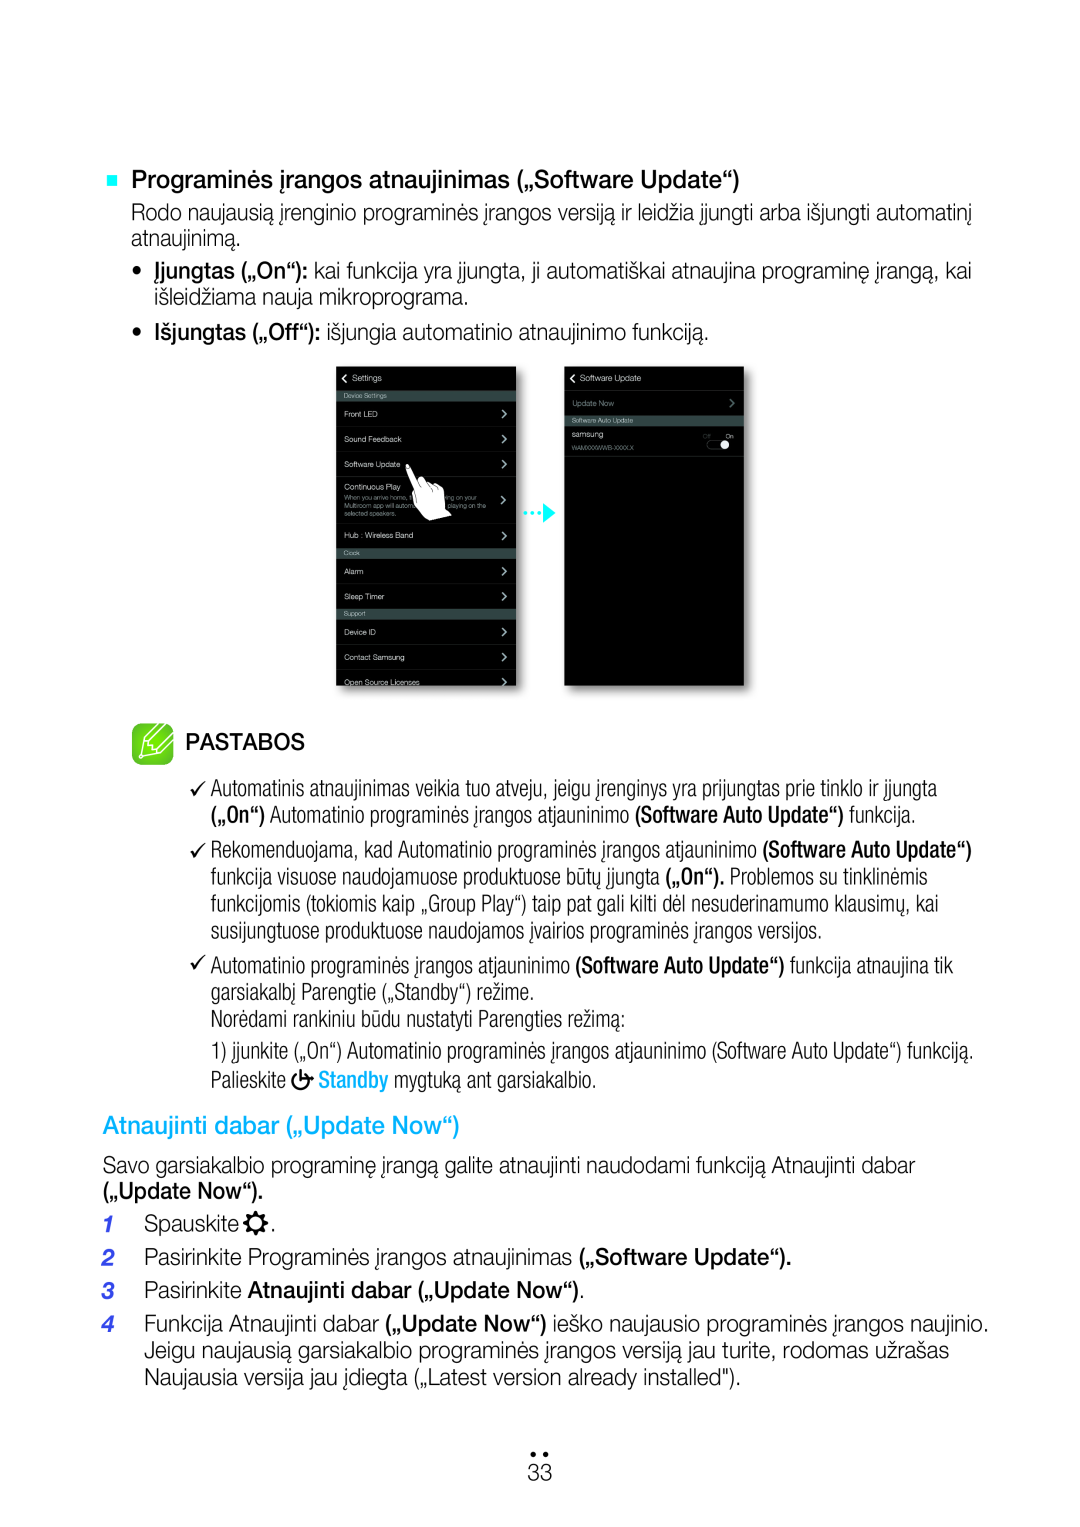 Samsung WAM7501/EN, WAM7500/EN manual Atnaujinti dabar „Update Now“, ` Programinės įrangos atnaujinimas „Software Update“ 